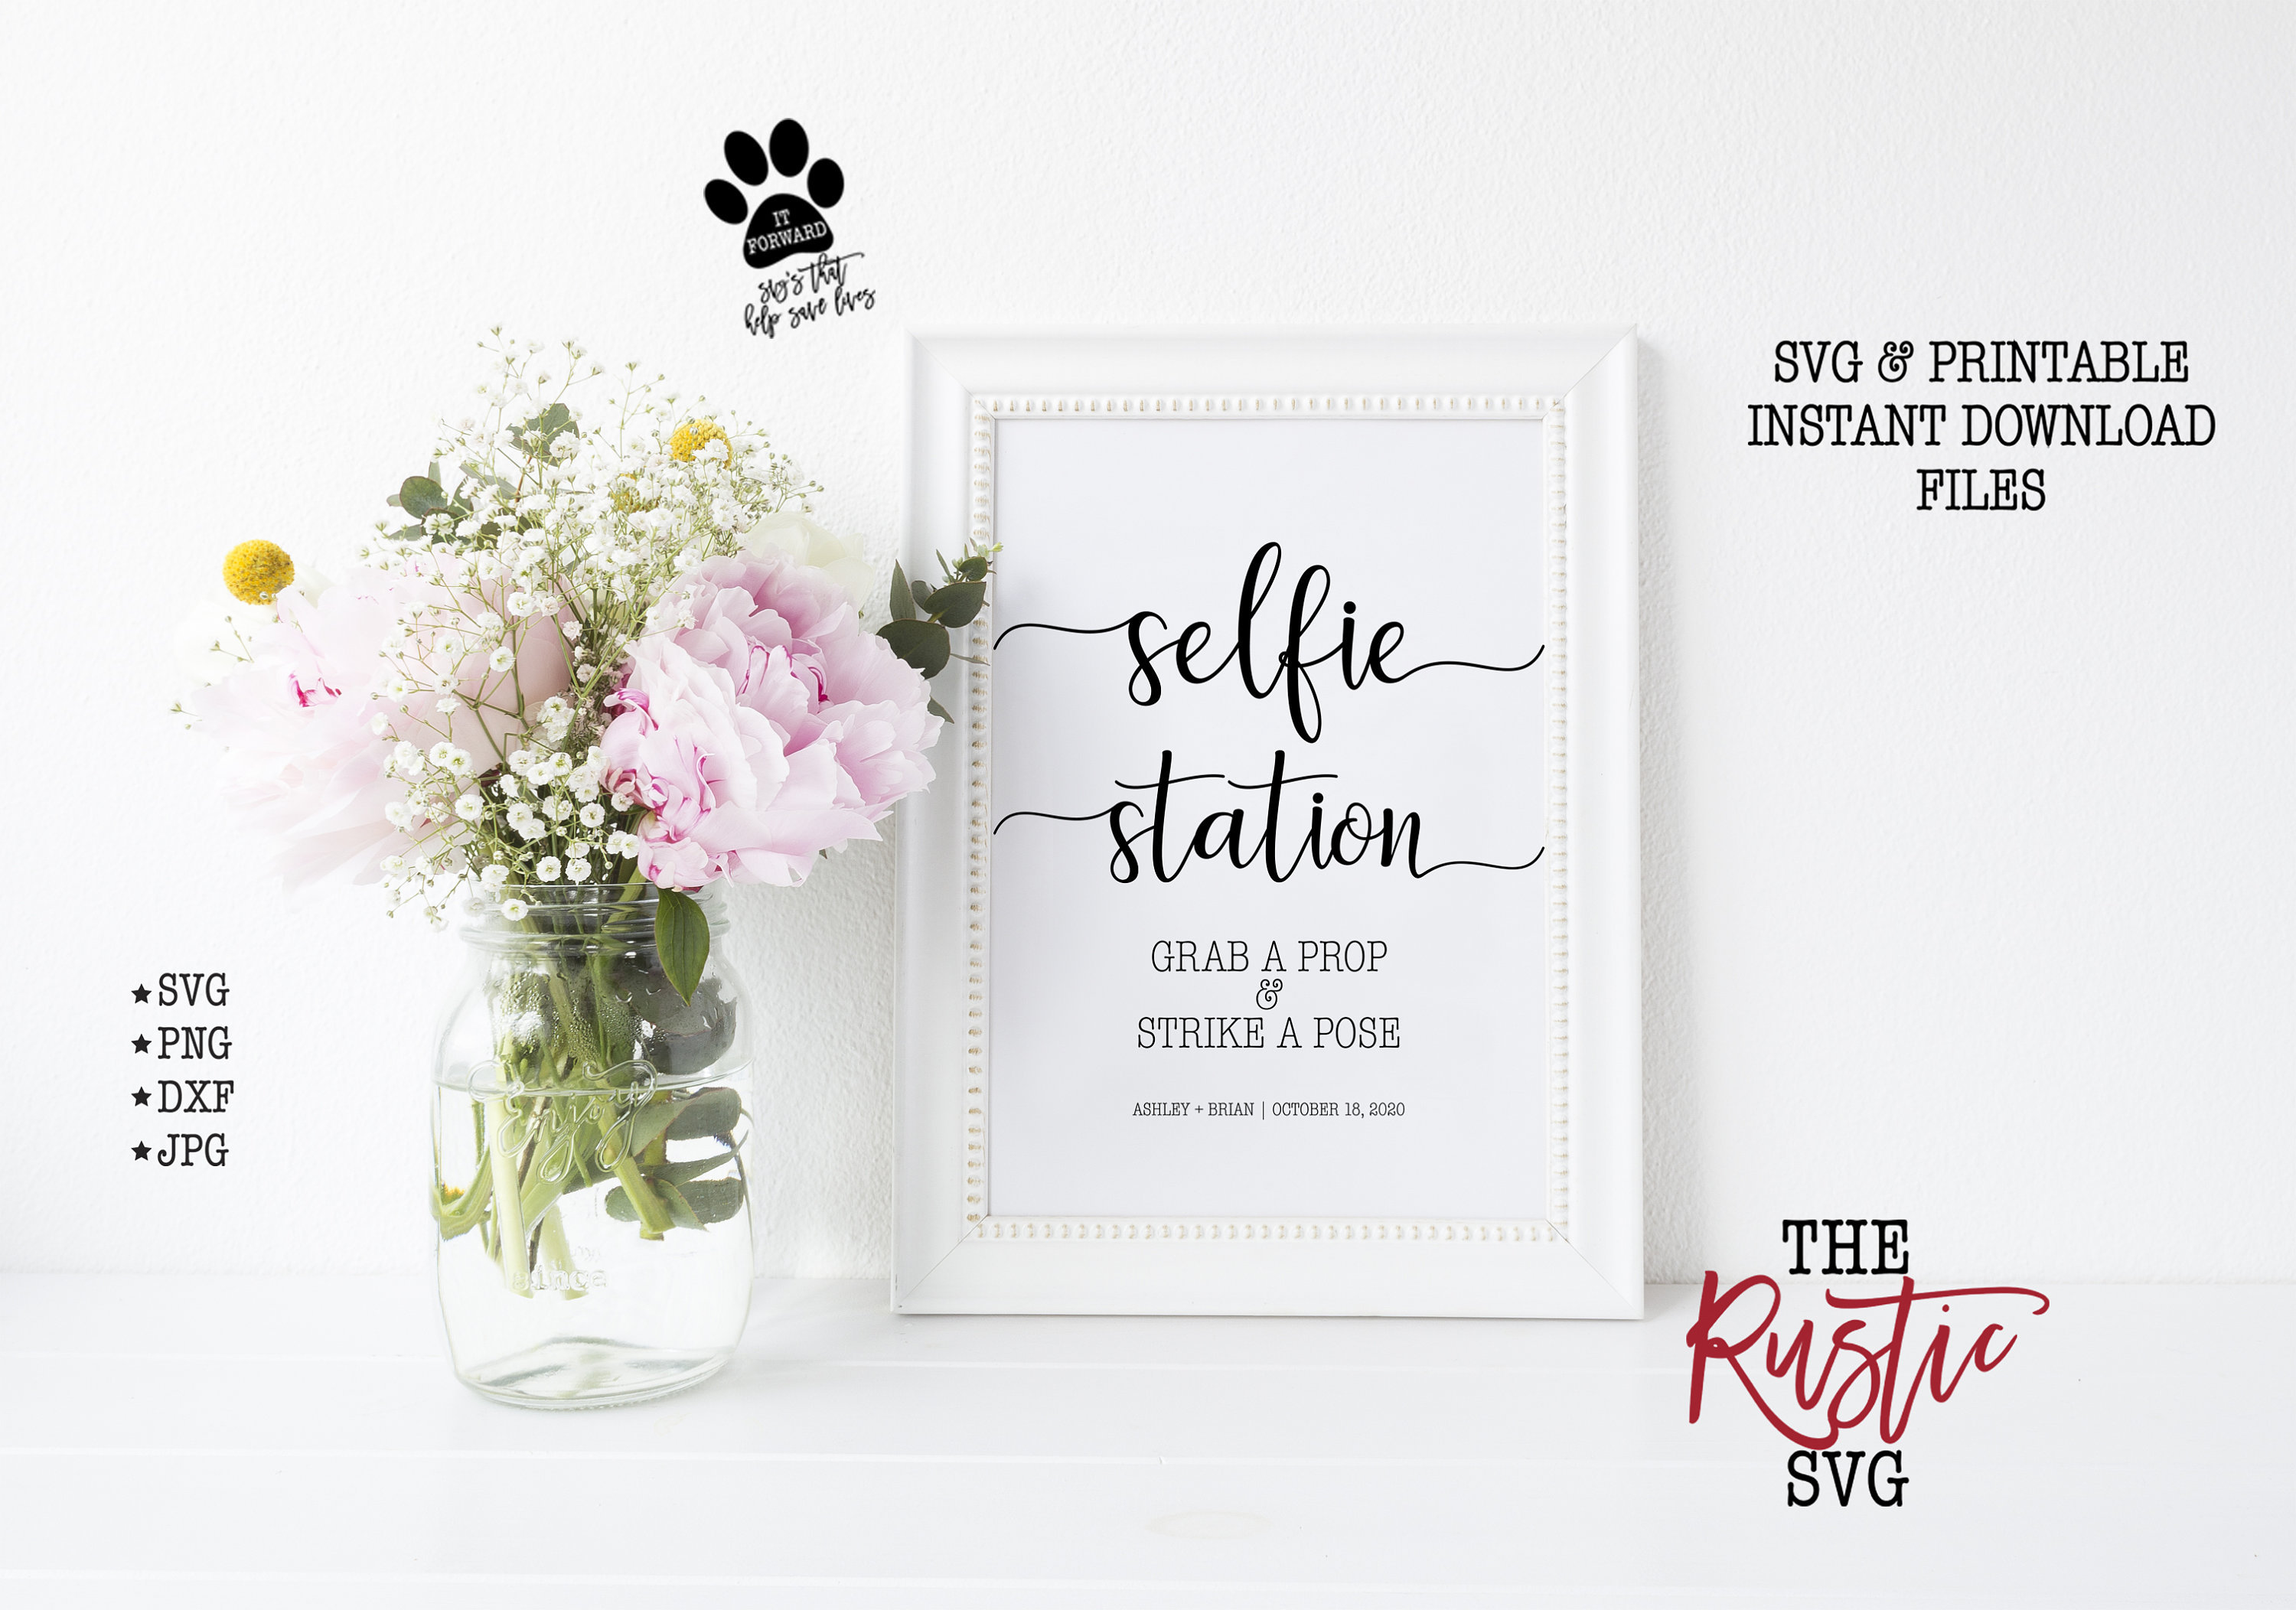 Selfie Station, Station Sign, Printable Wedding Svg, Jpg, Png, Cricut, Silhouette, 005